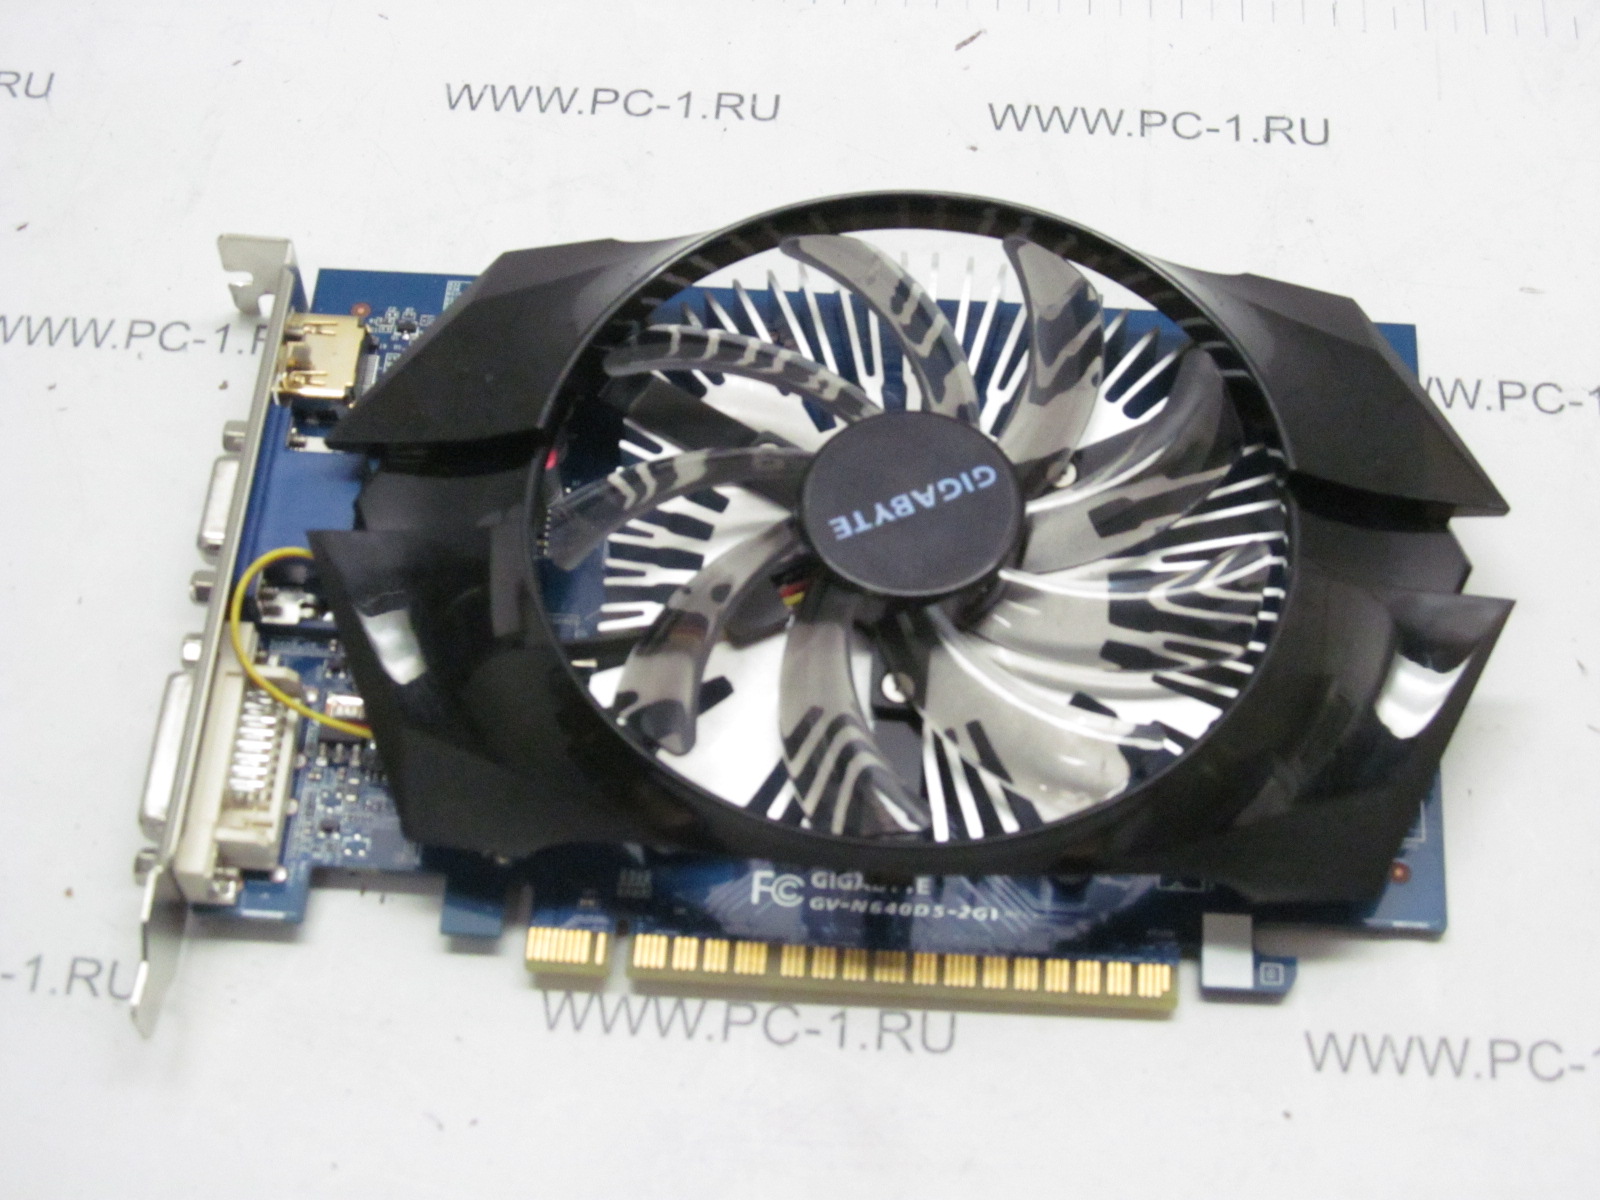 PCI-E Gigabyte GeForce GT 640 2Gb /64